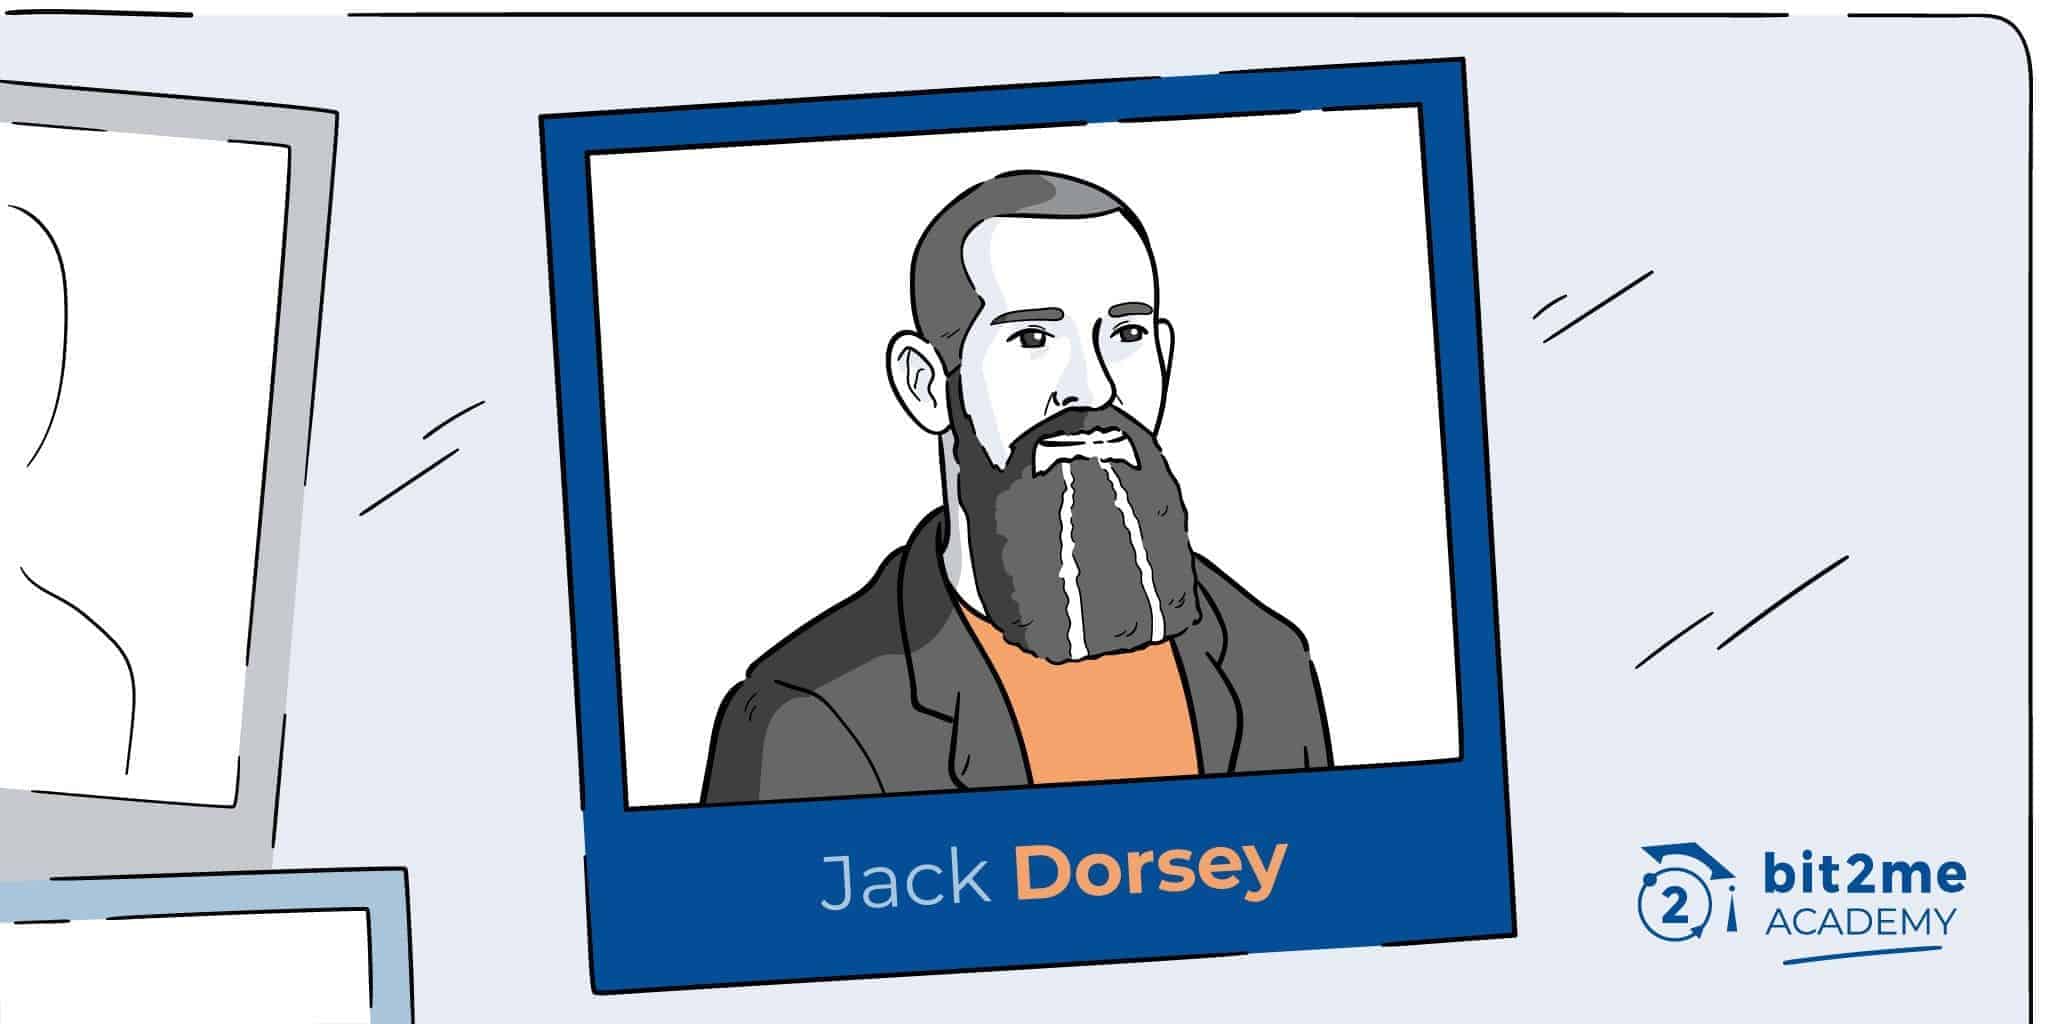 Chi è Jack Dorsey?